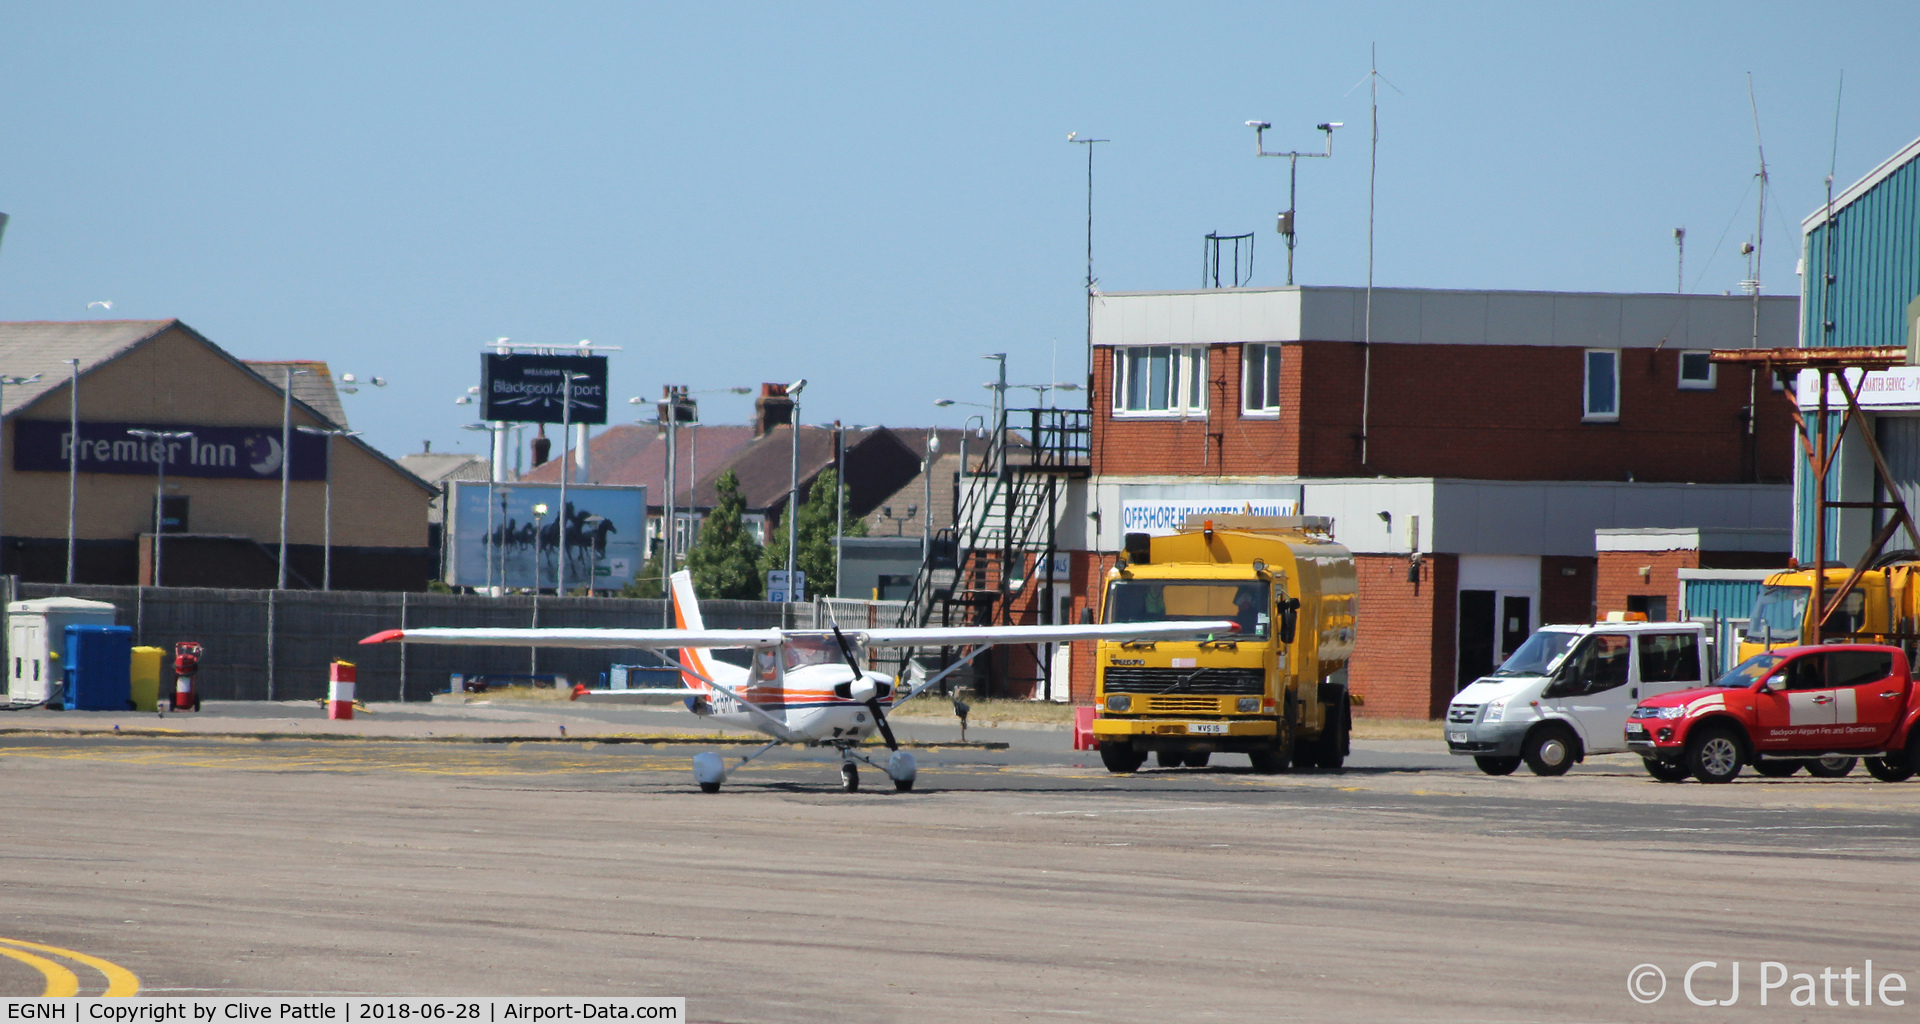 Blackpool International Airport, Blackpool, England United Kingdom (EGNH) - Apron view at Blackpool